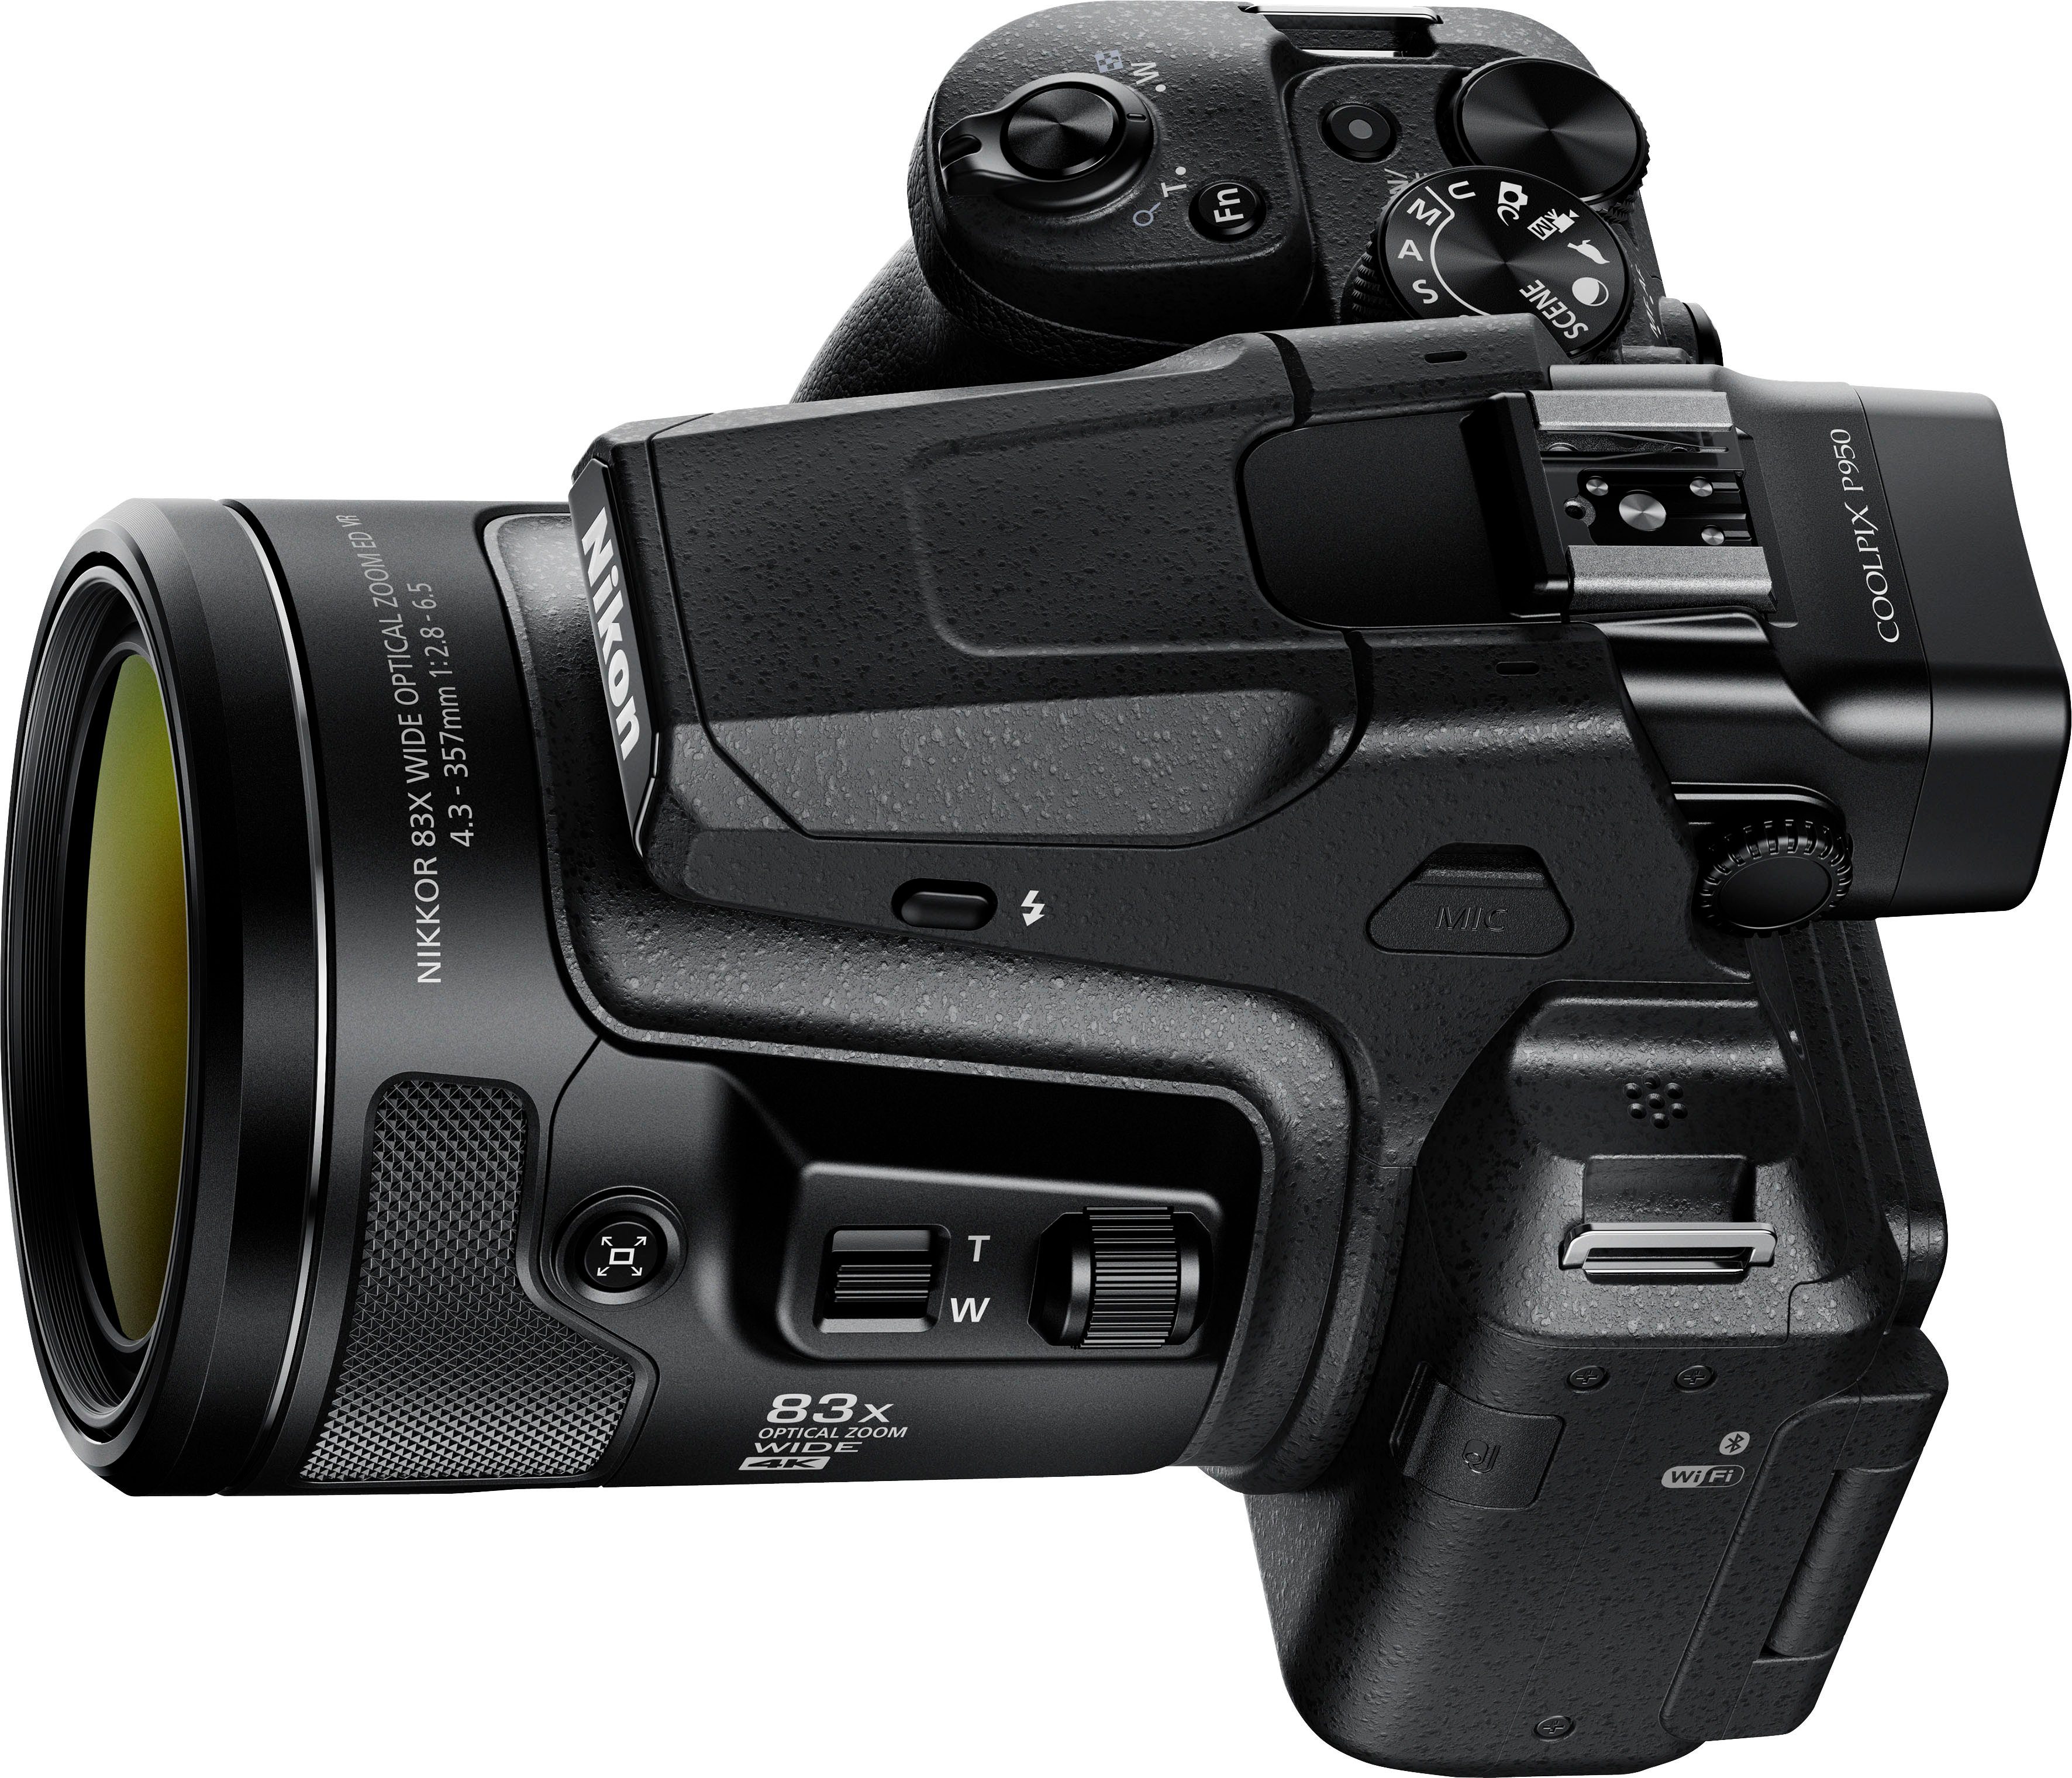 (16 P950 Bridge-Kamera Zoom, (WiFi) Nikon Coolpix MP, Bluetooth, opt. 83x WLAN